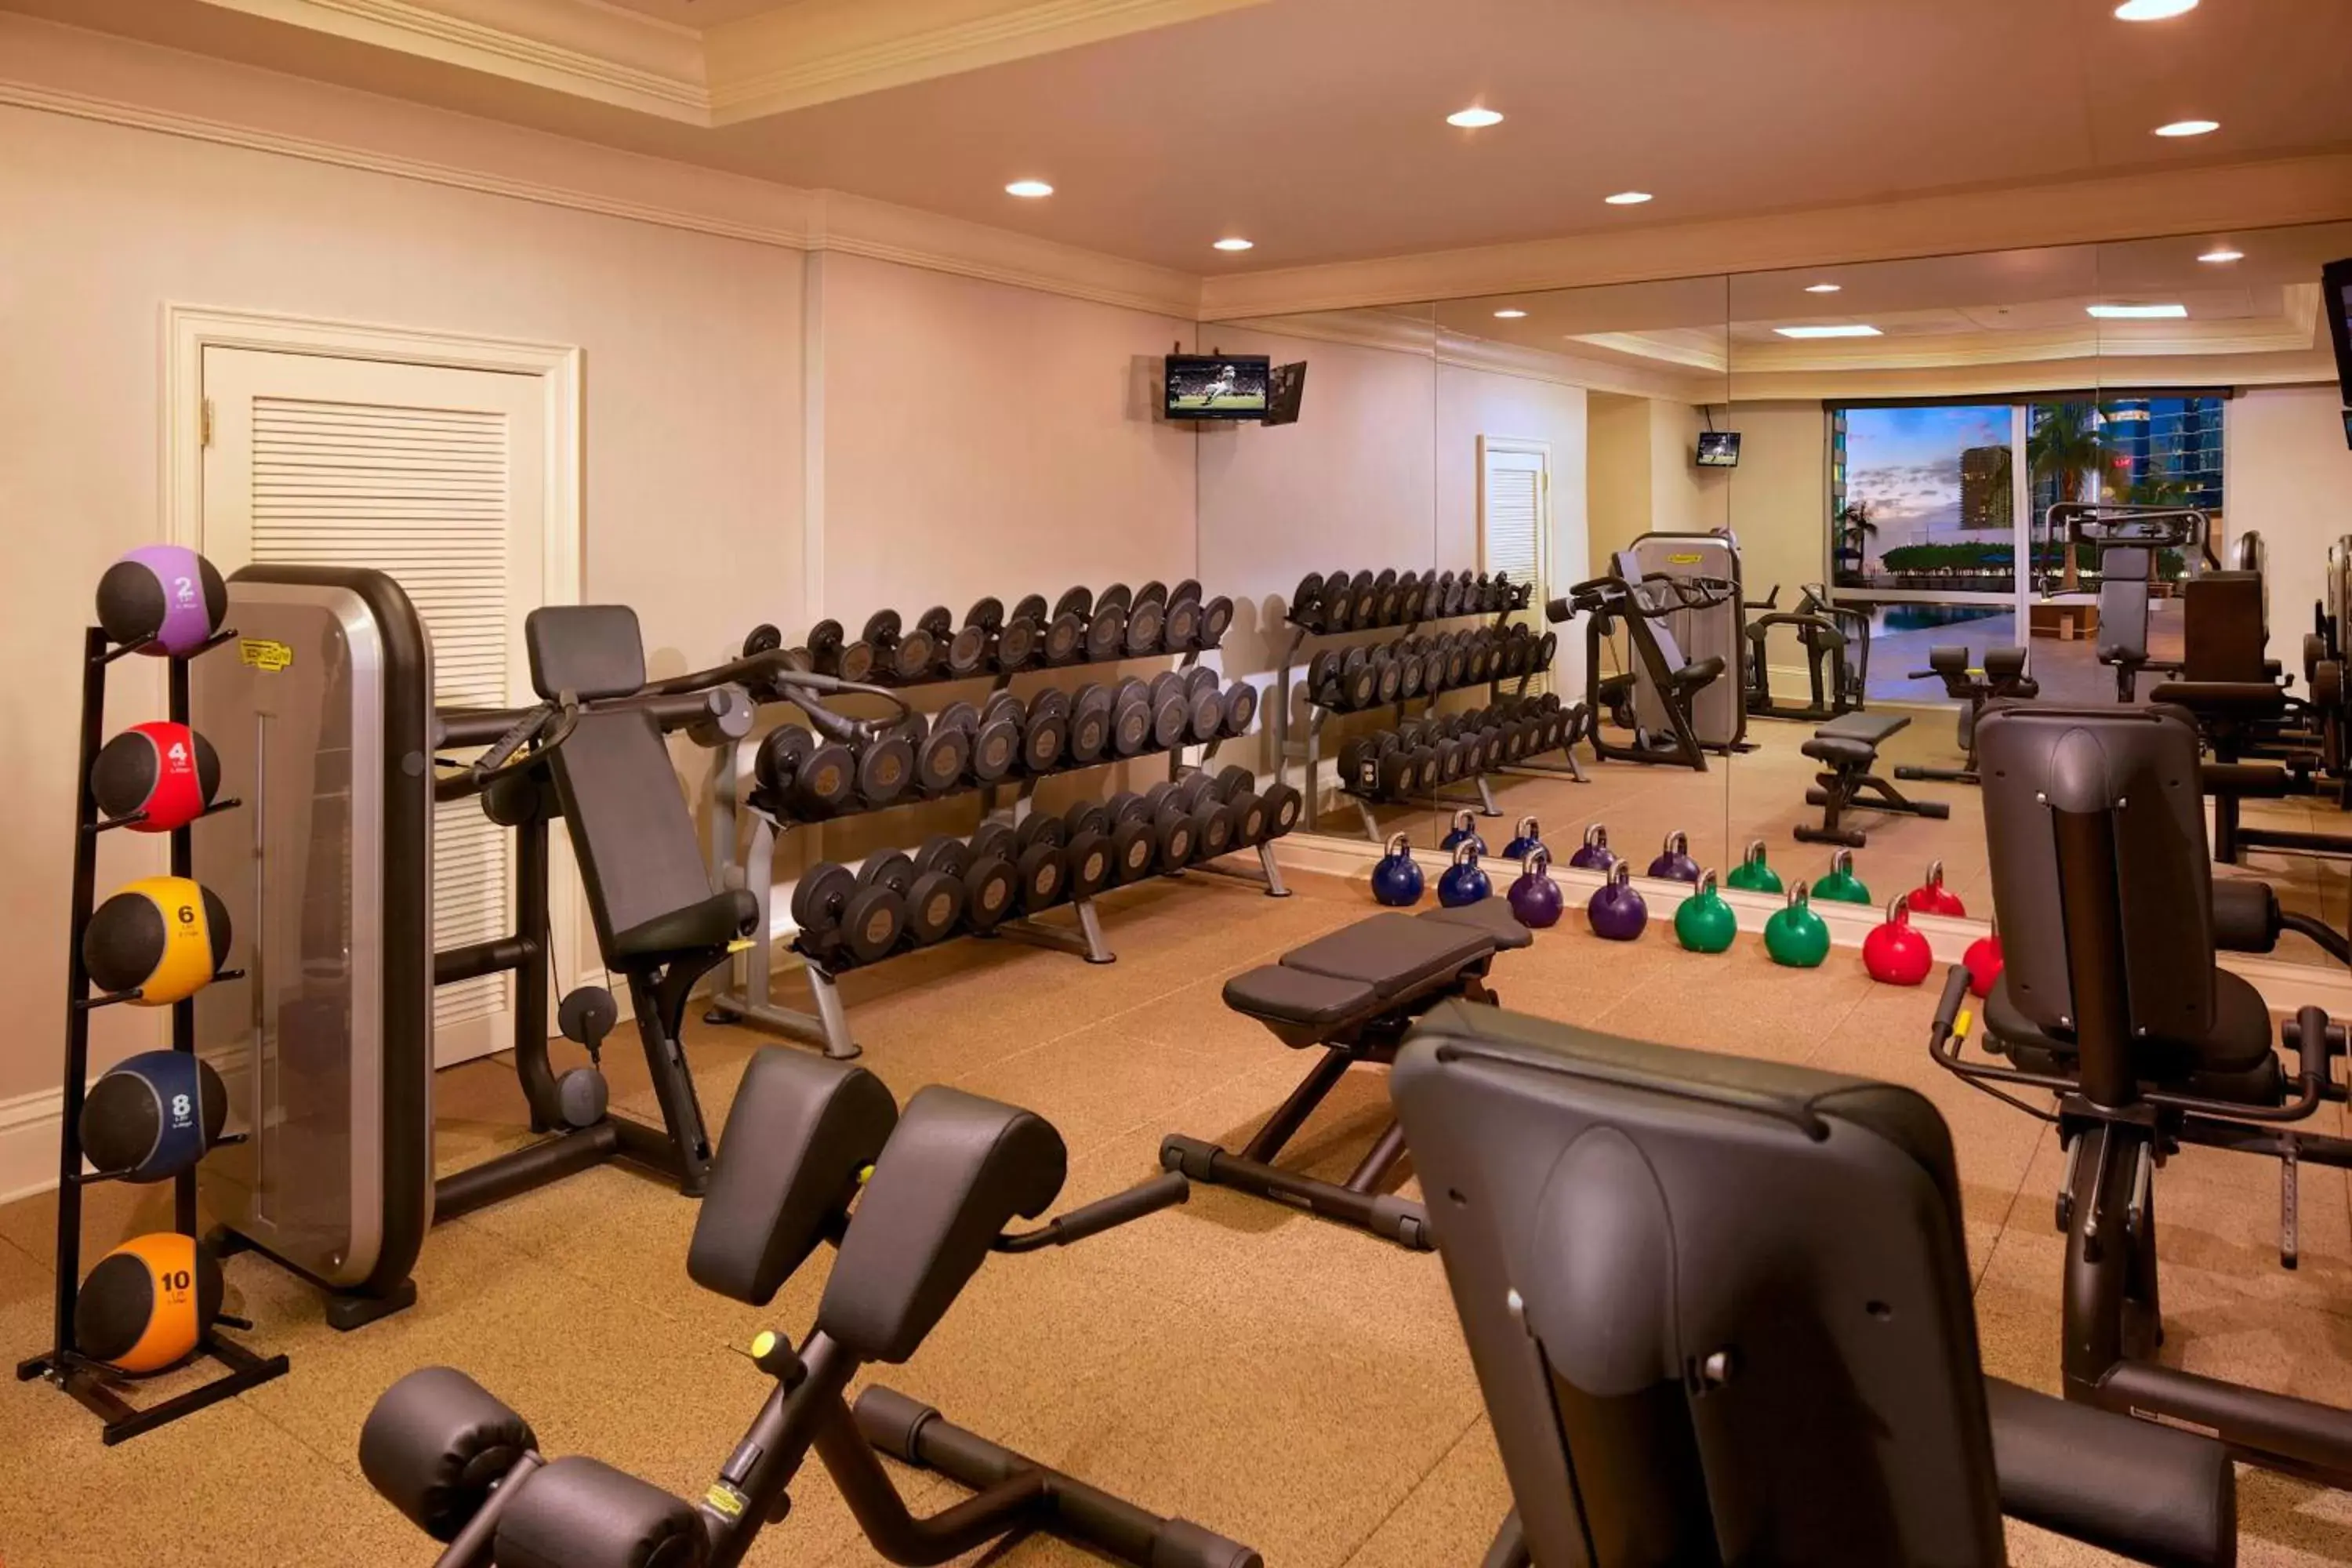 Fitness centre/facilities, Fitness Center/Facilities in JW Marriott Miami